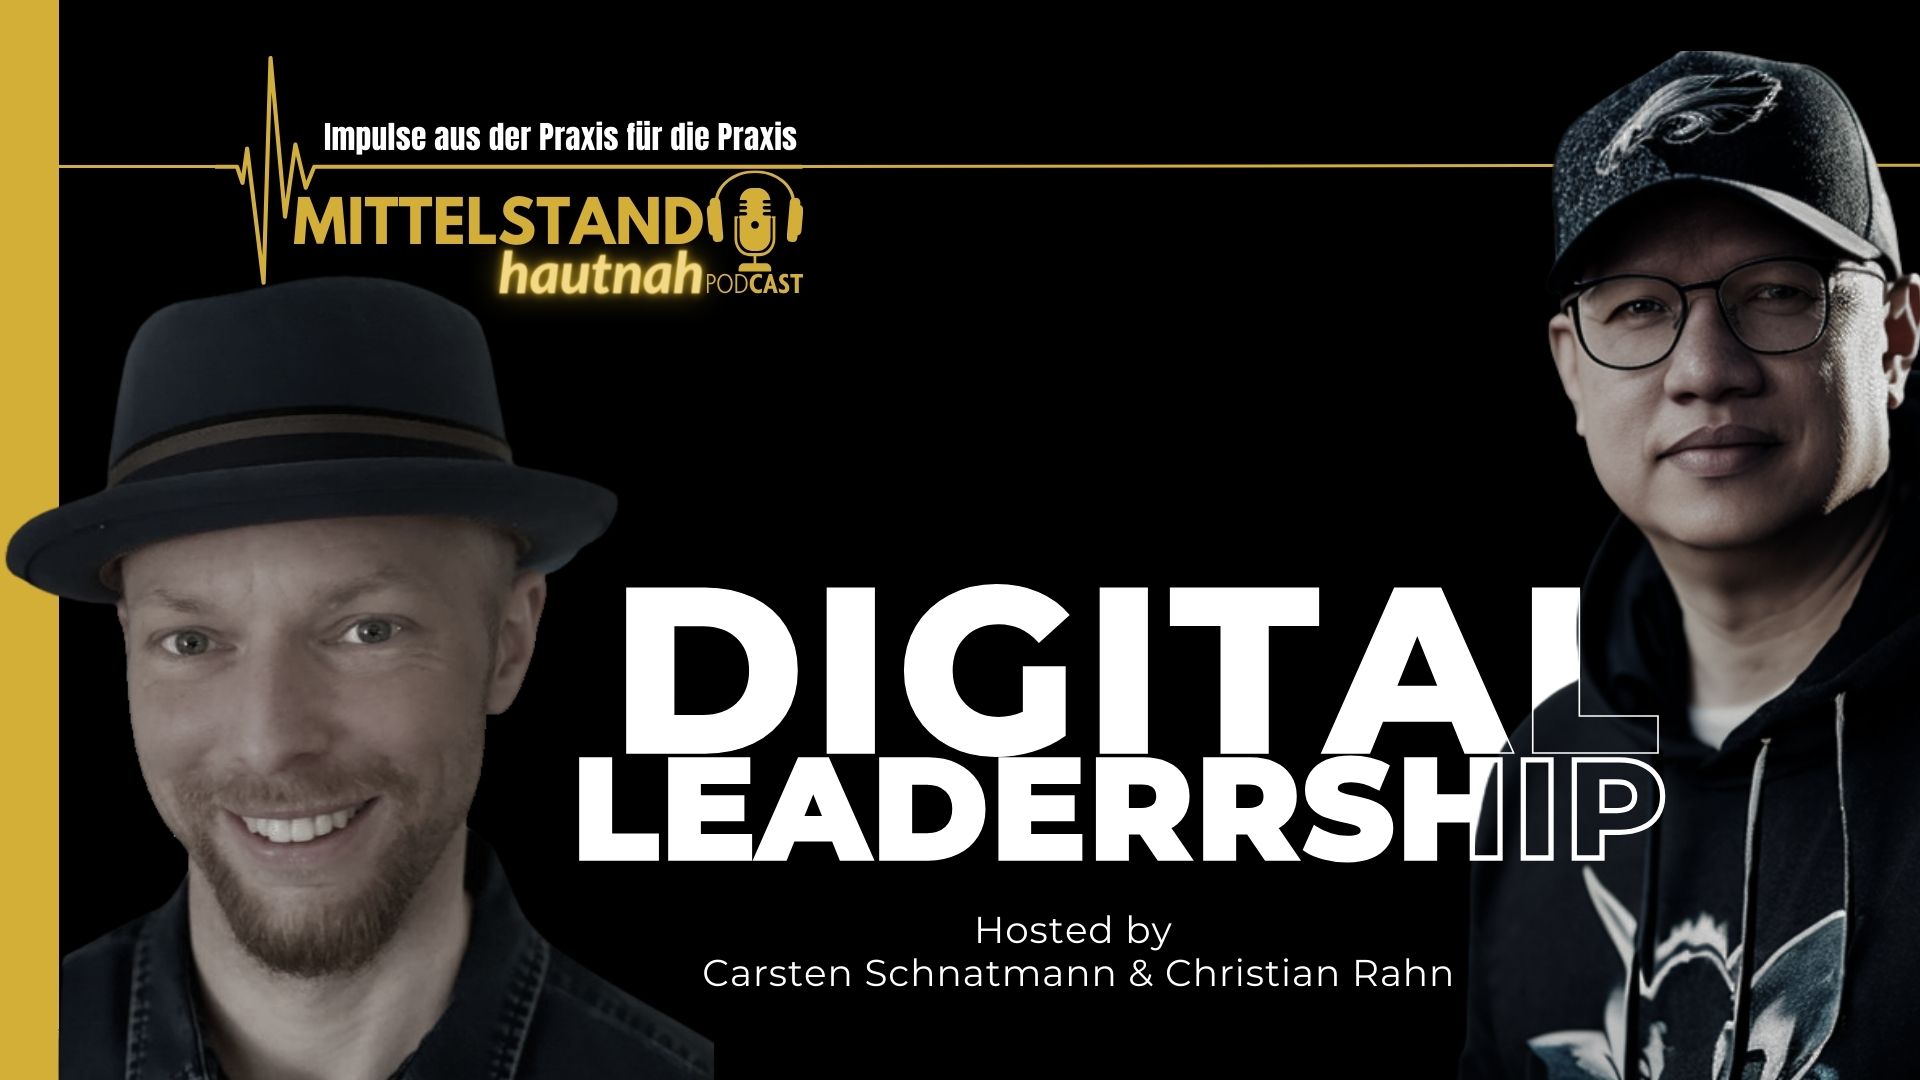 Podcast Mittelstand hautnah digital leadership